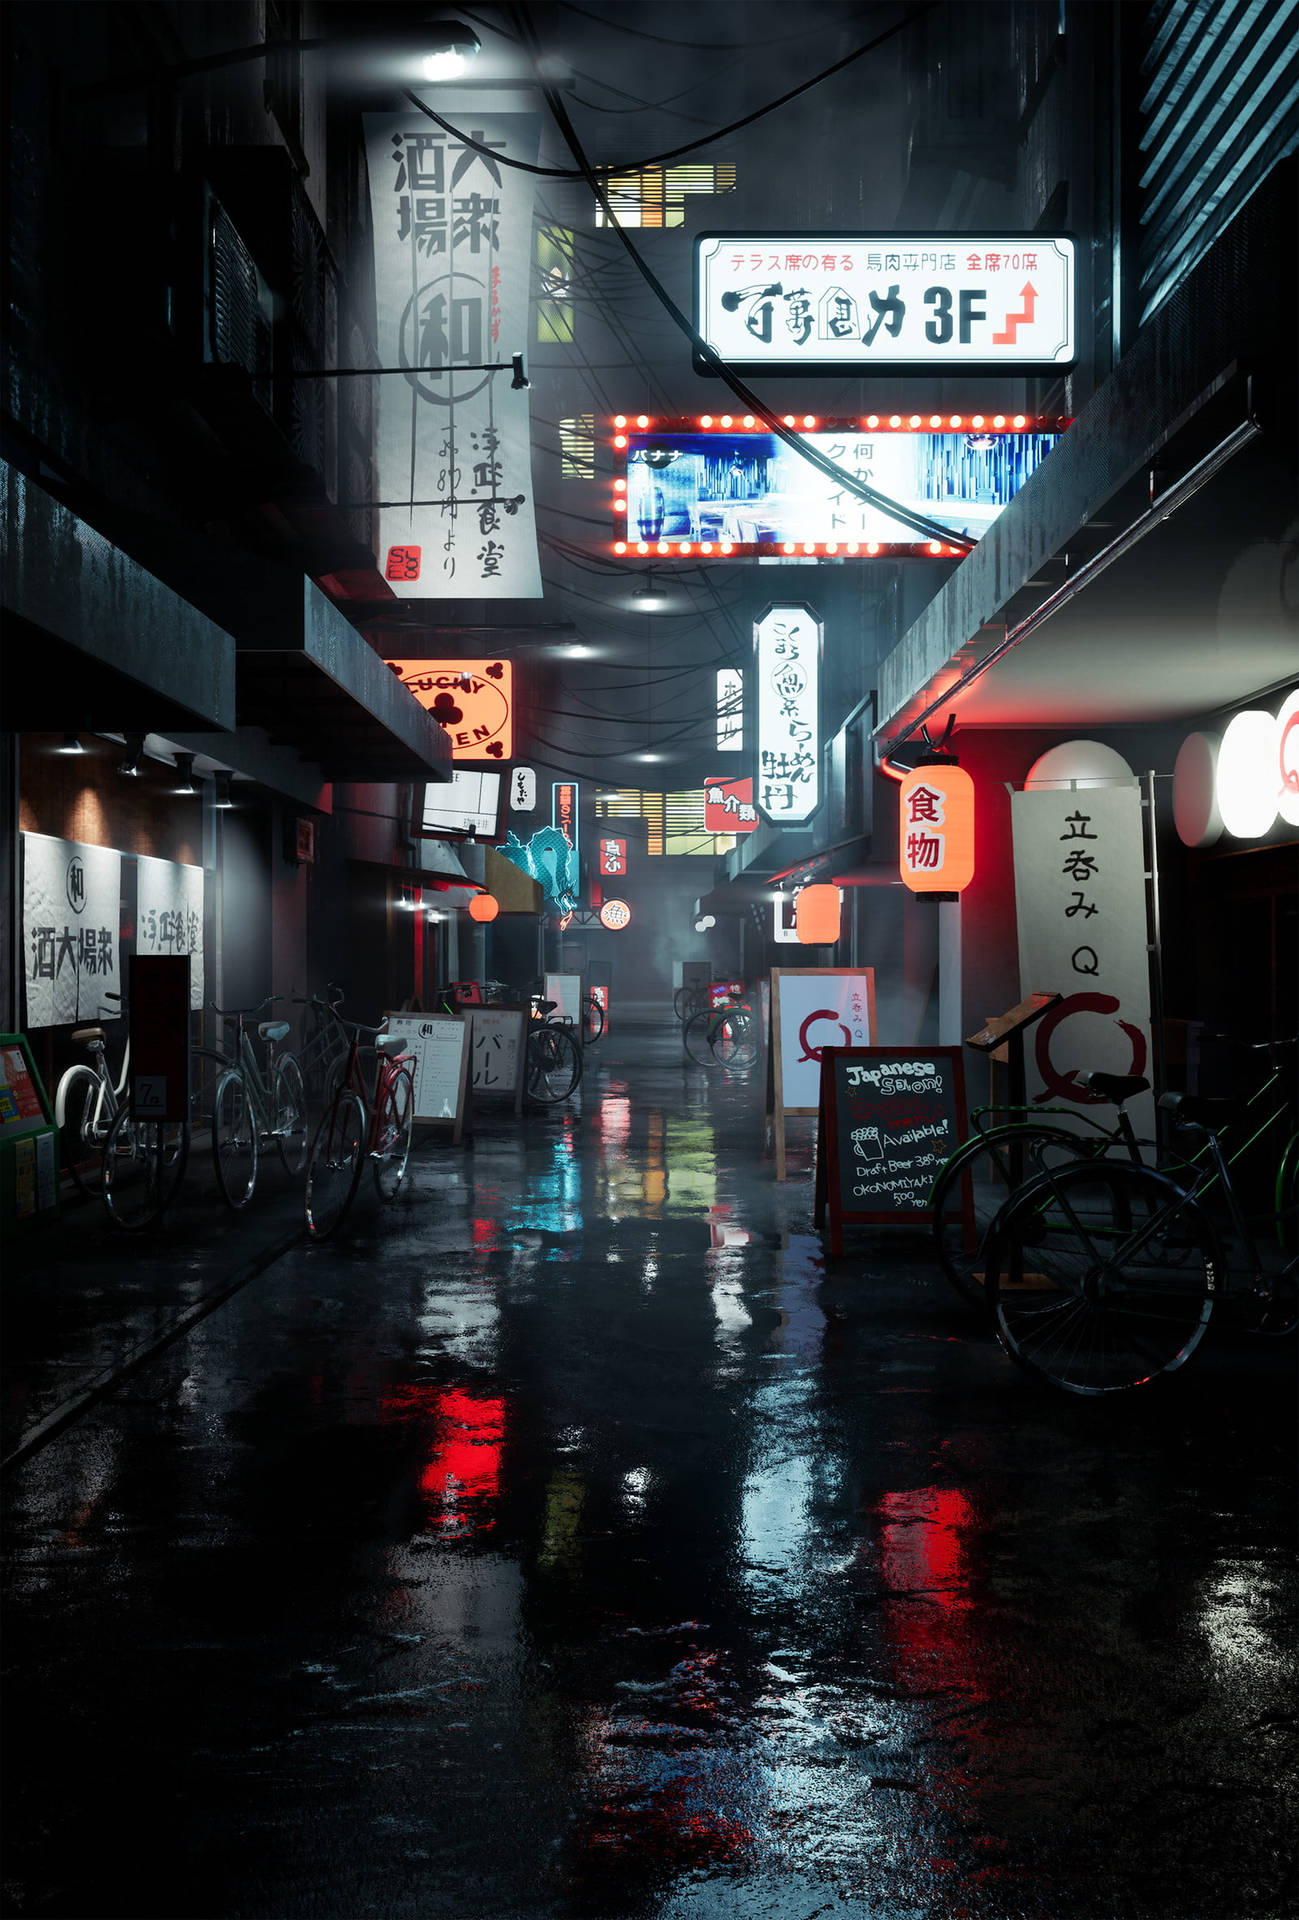 Rainy Japan 4k At Night Wallpaper